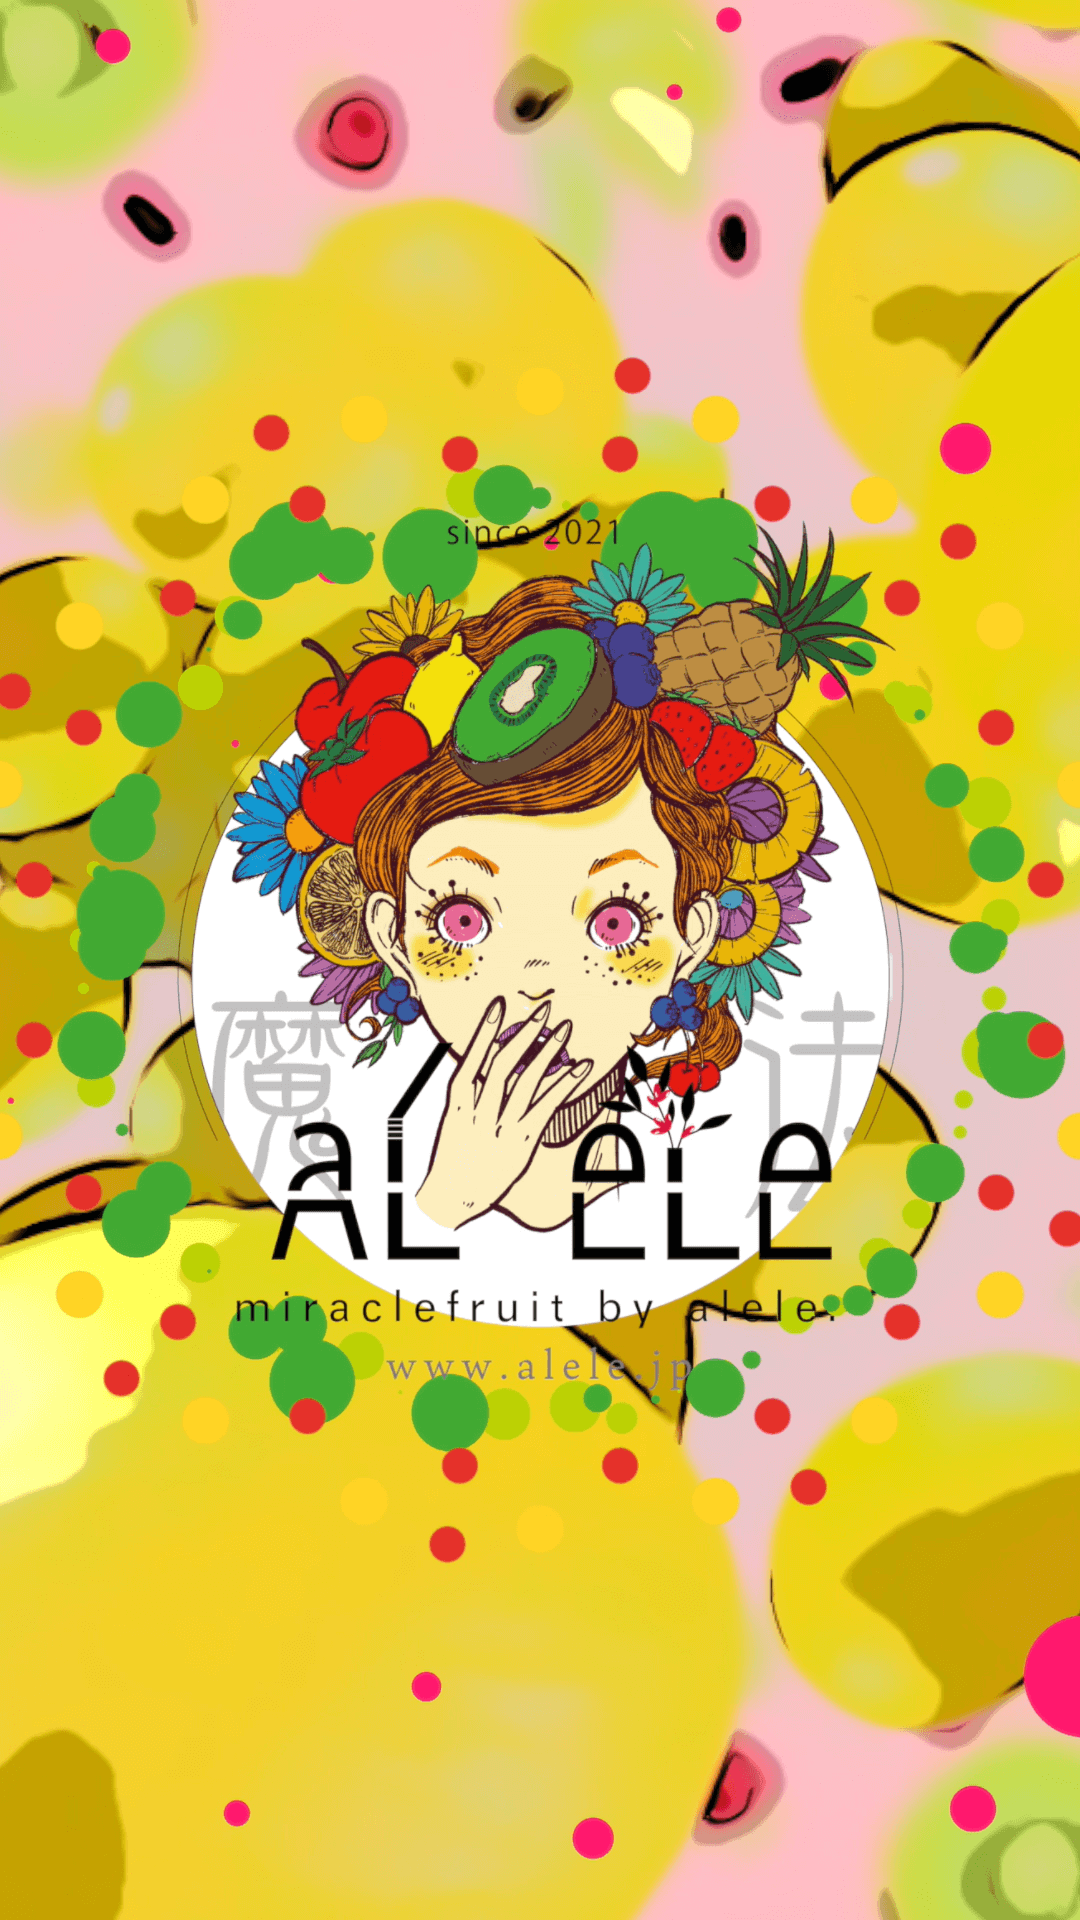 ALeLe miraclefruit by alele.